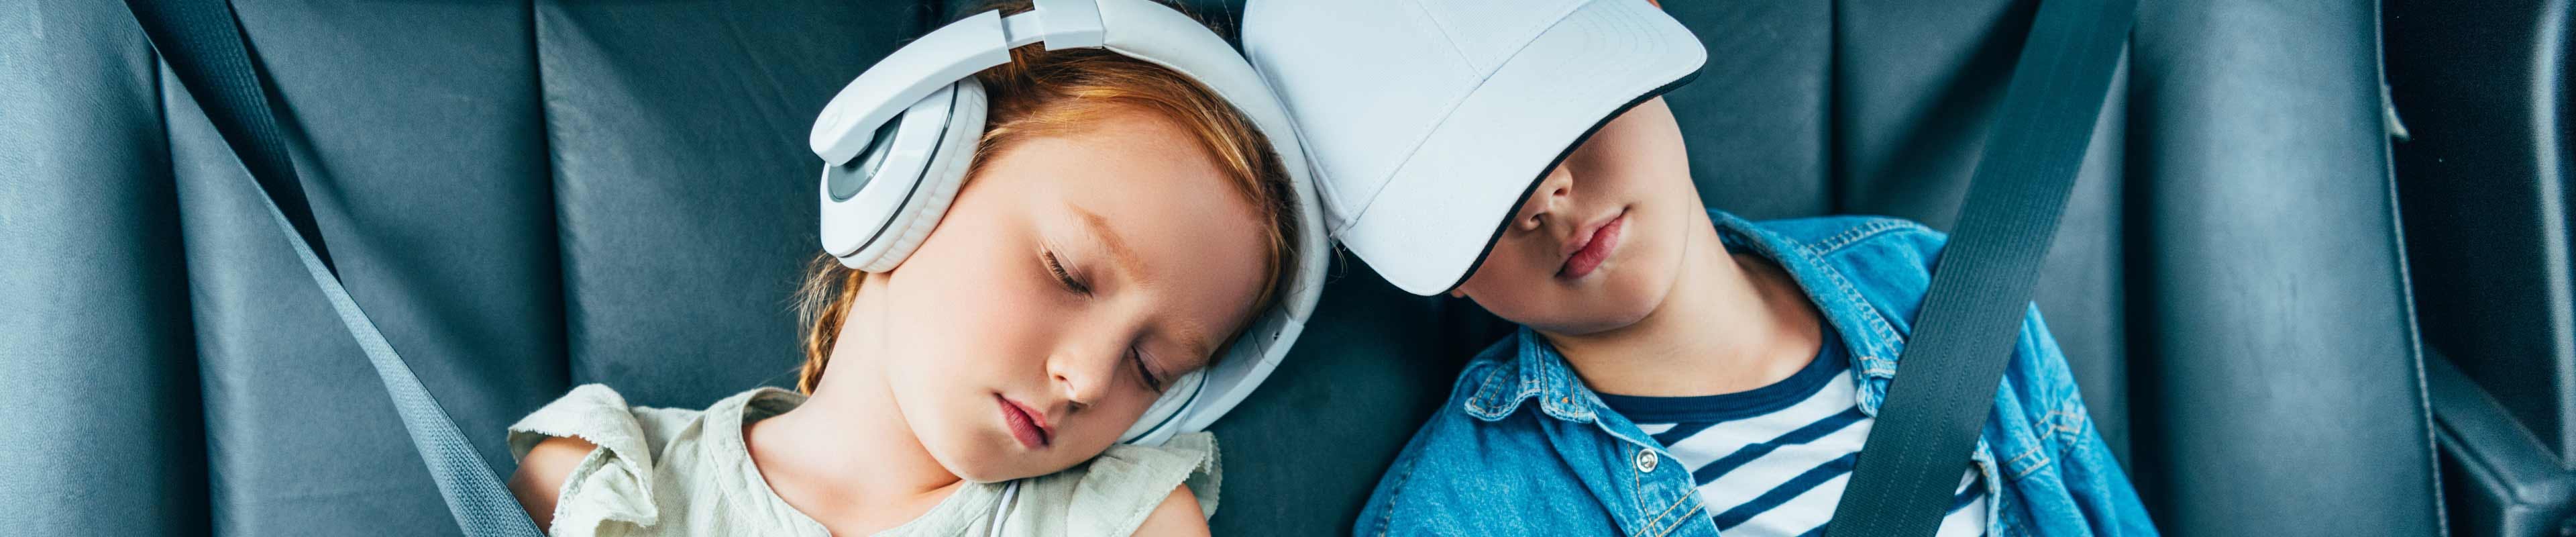 Siblings in the back seat of a car sleeping